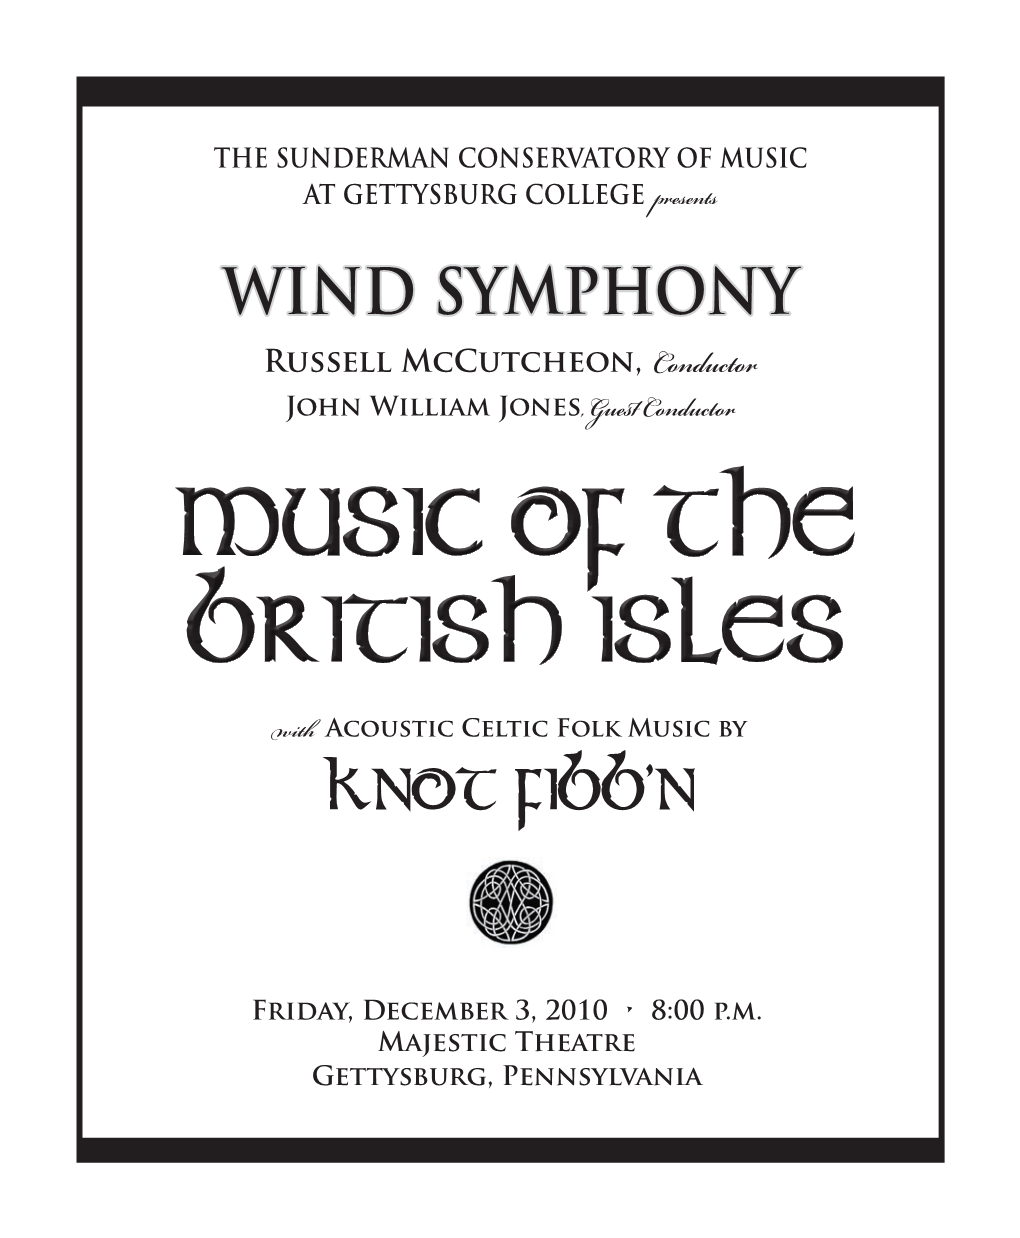 Wind Symphony Russell Mccutcheon, John William Jones Conductor , Guest Conductor